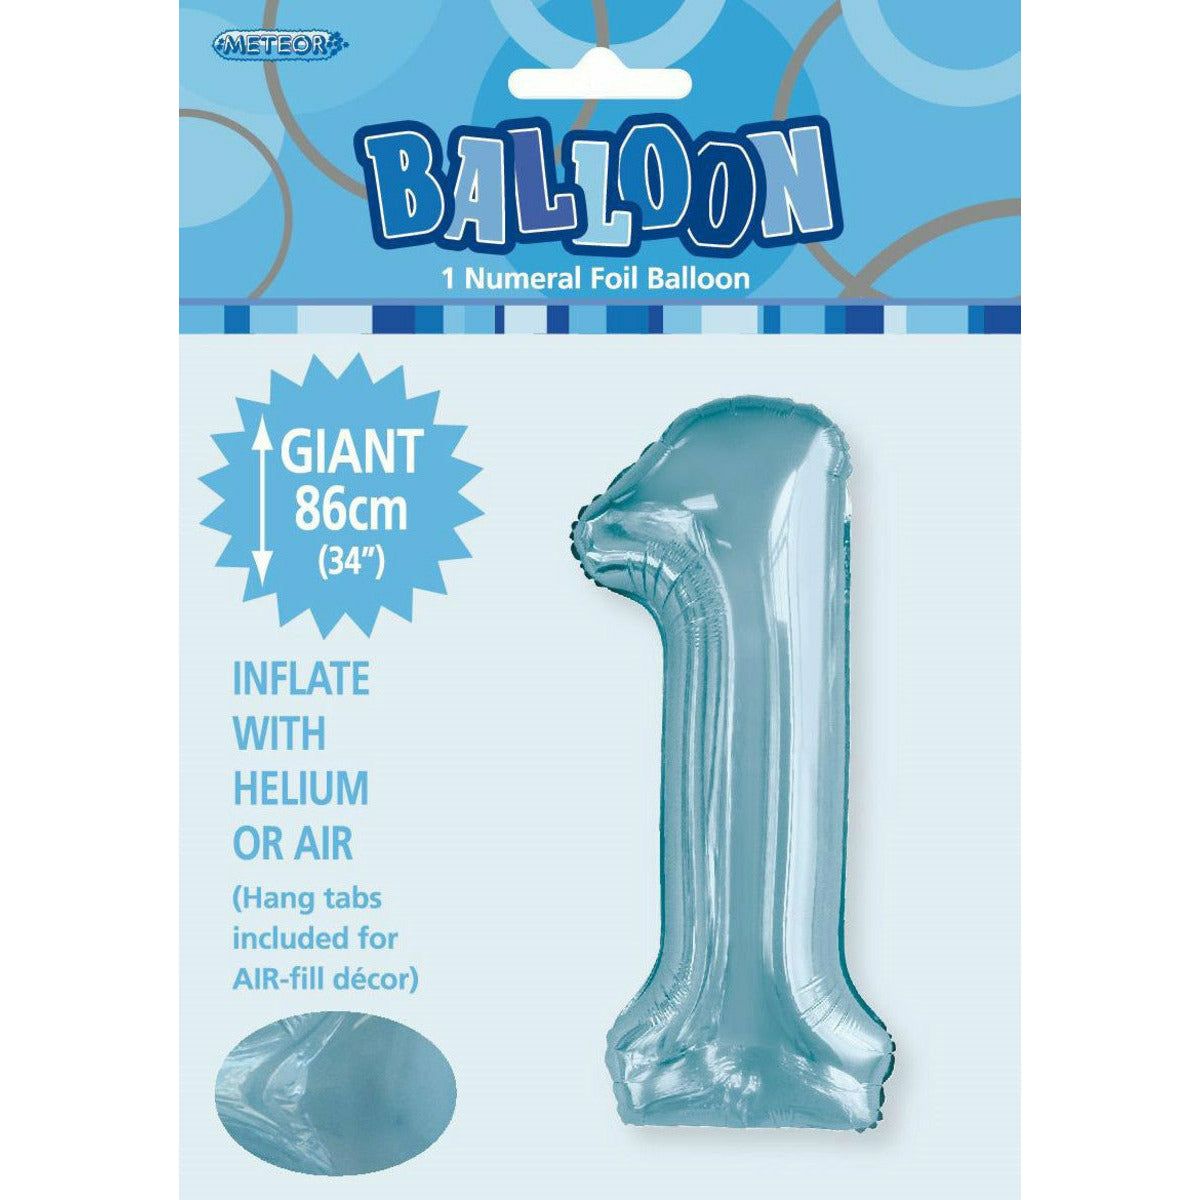 Powder Blue 1 Numeral Foil Balloon - 86cm 1 Piece - Dollars and Sense